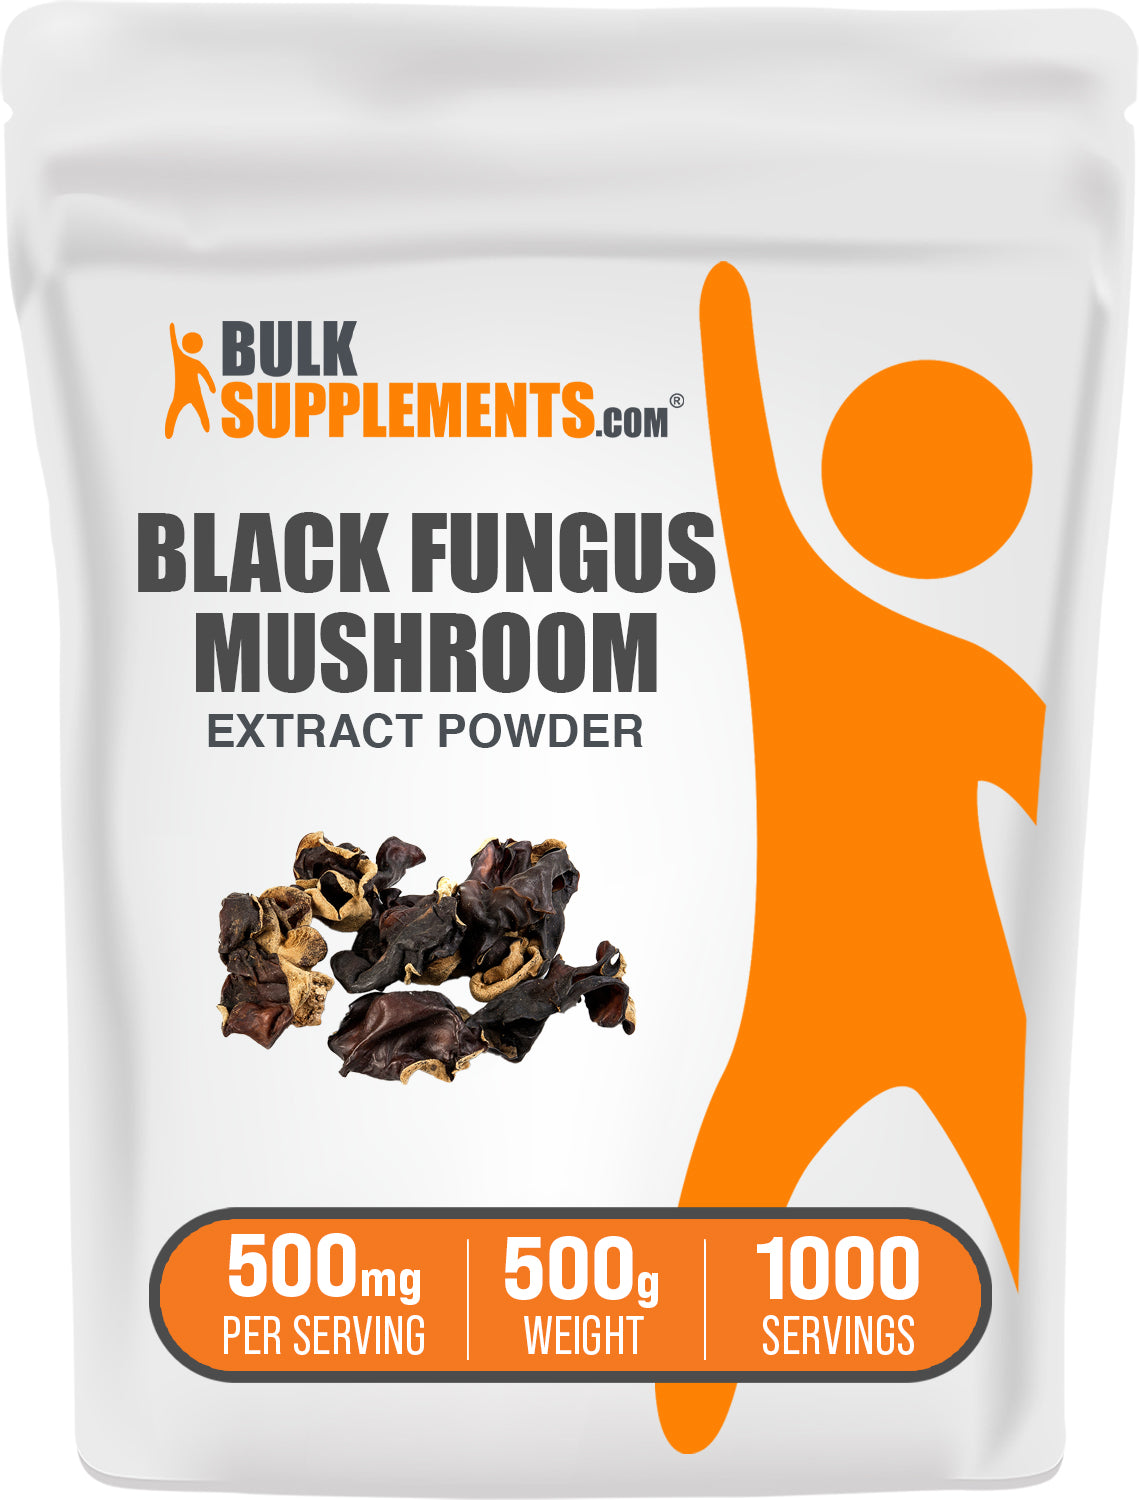 BulkSupplements.com Black Fungus Mushroom Extract Powder 500g Bag